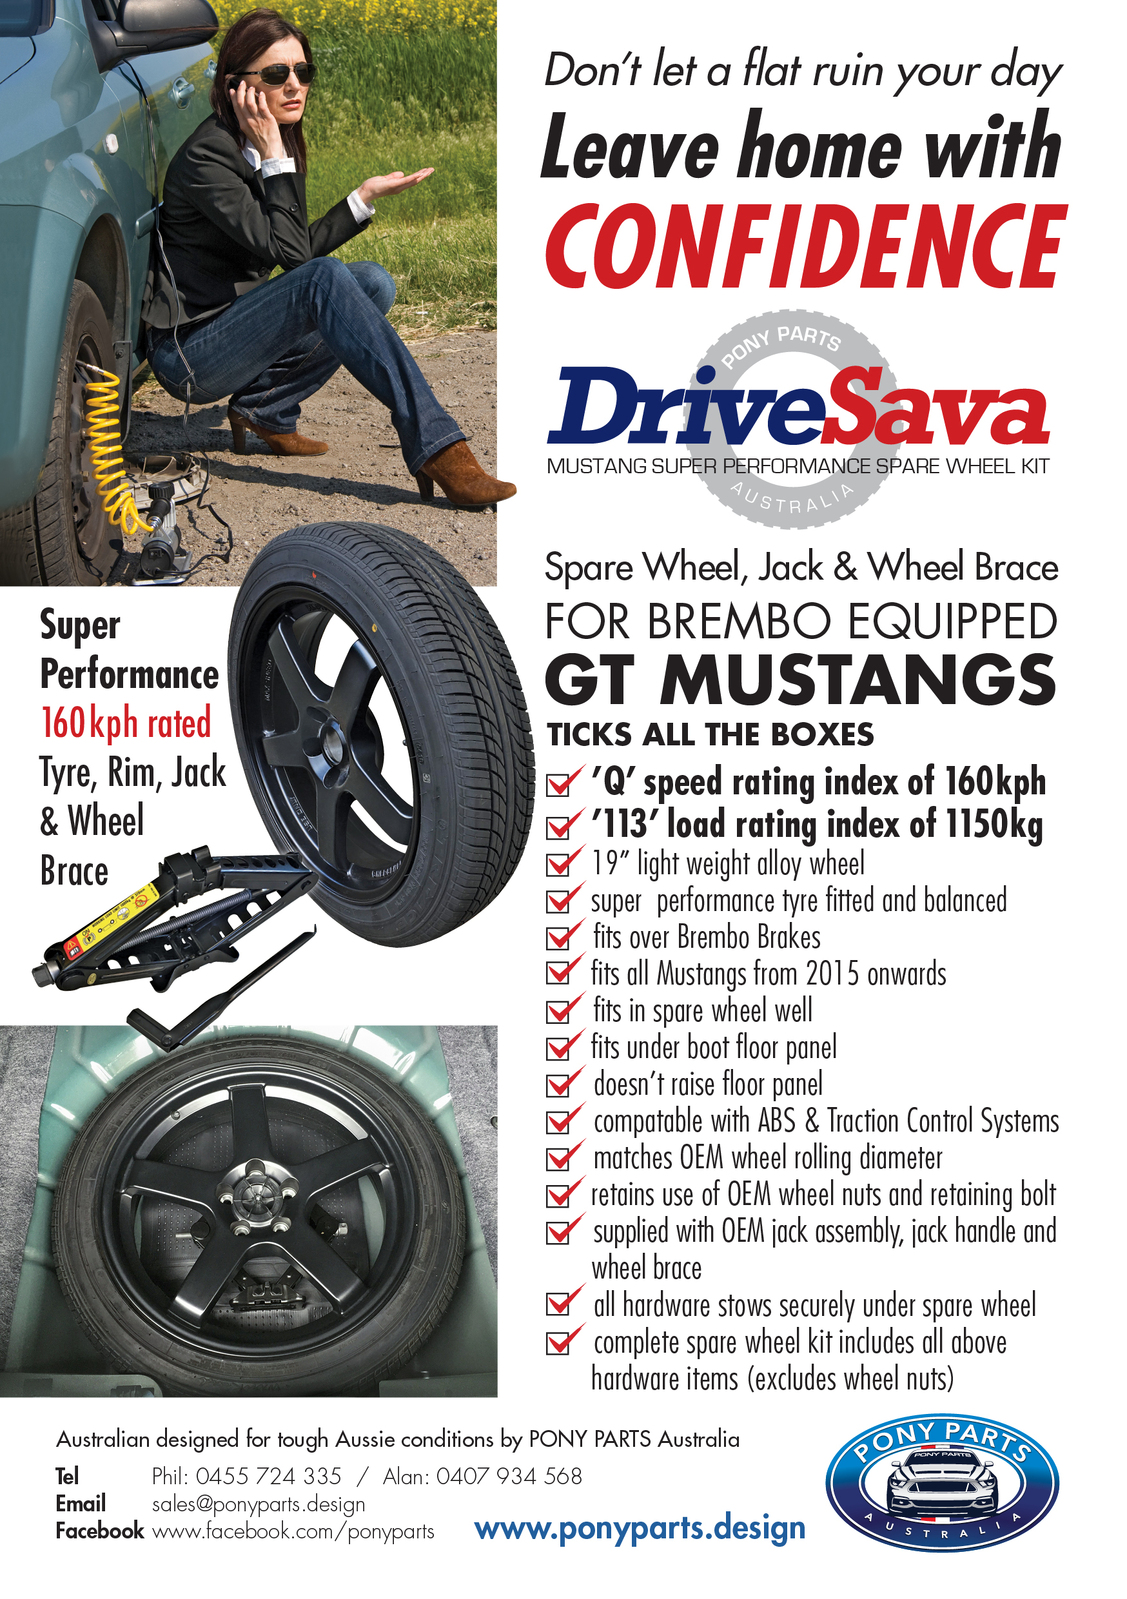 DriveSava -Mustang  Spare Wheel  - EASTER SPECIAL